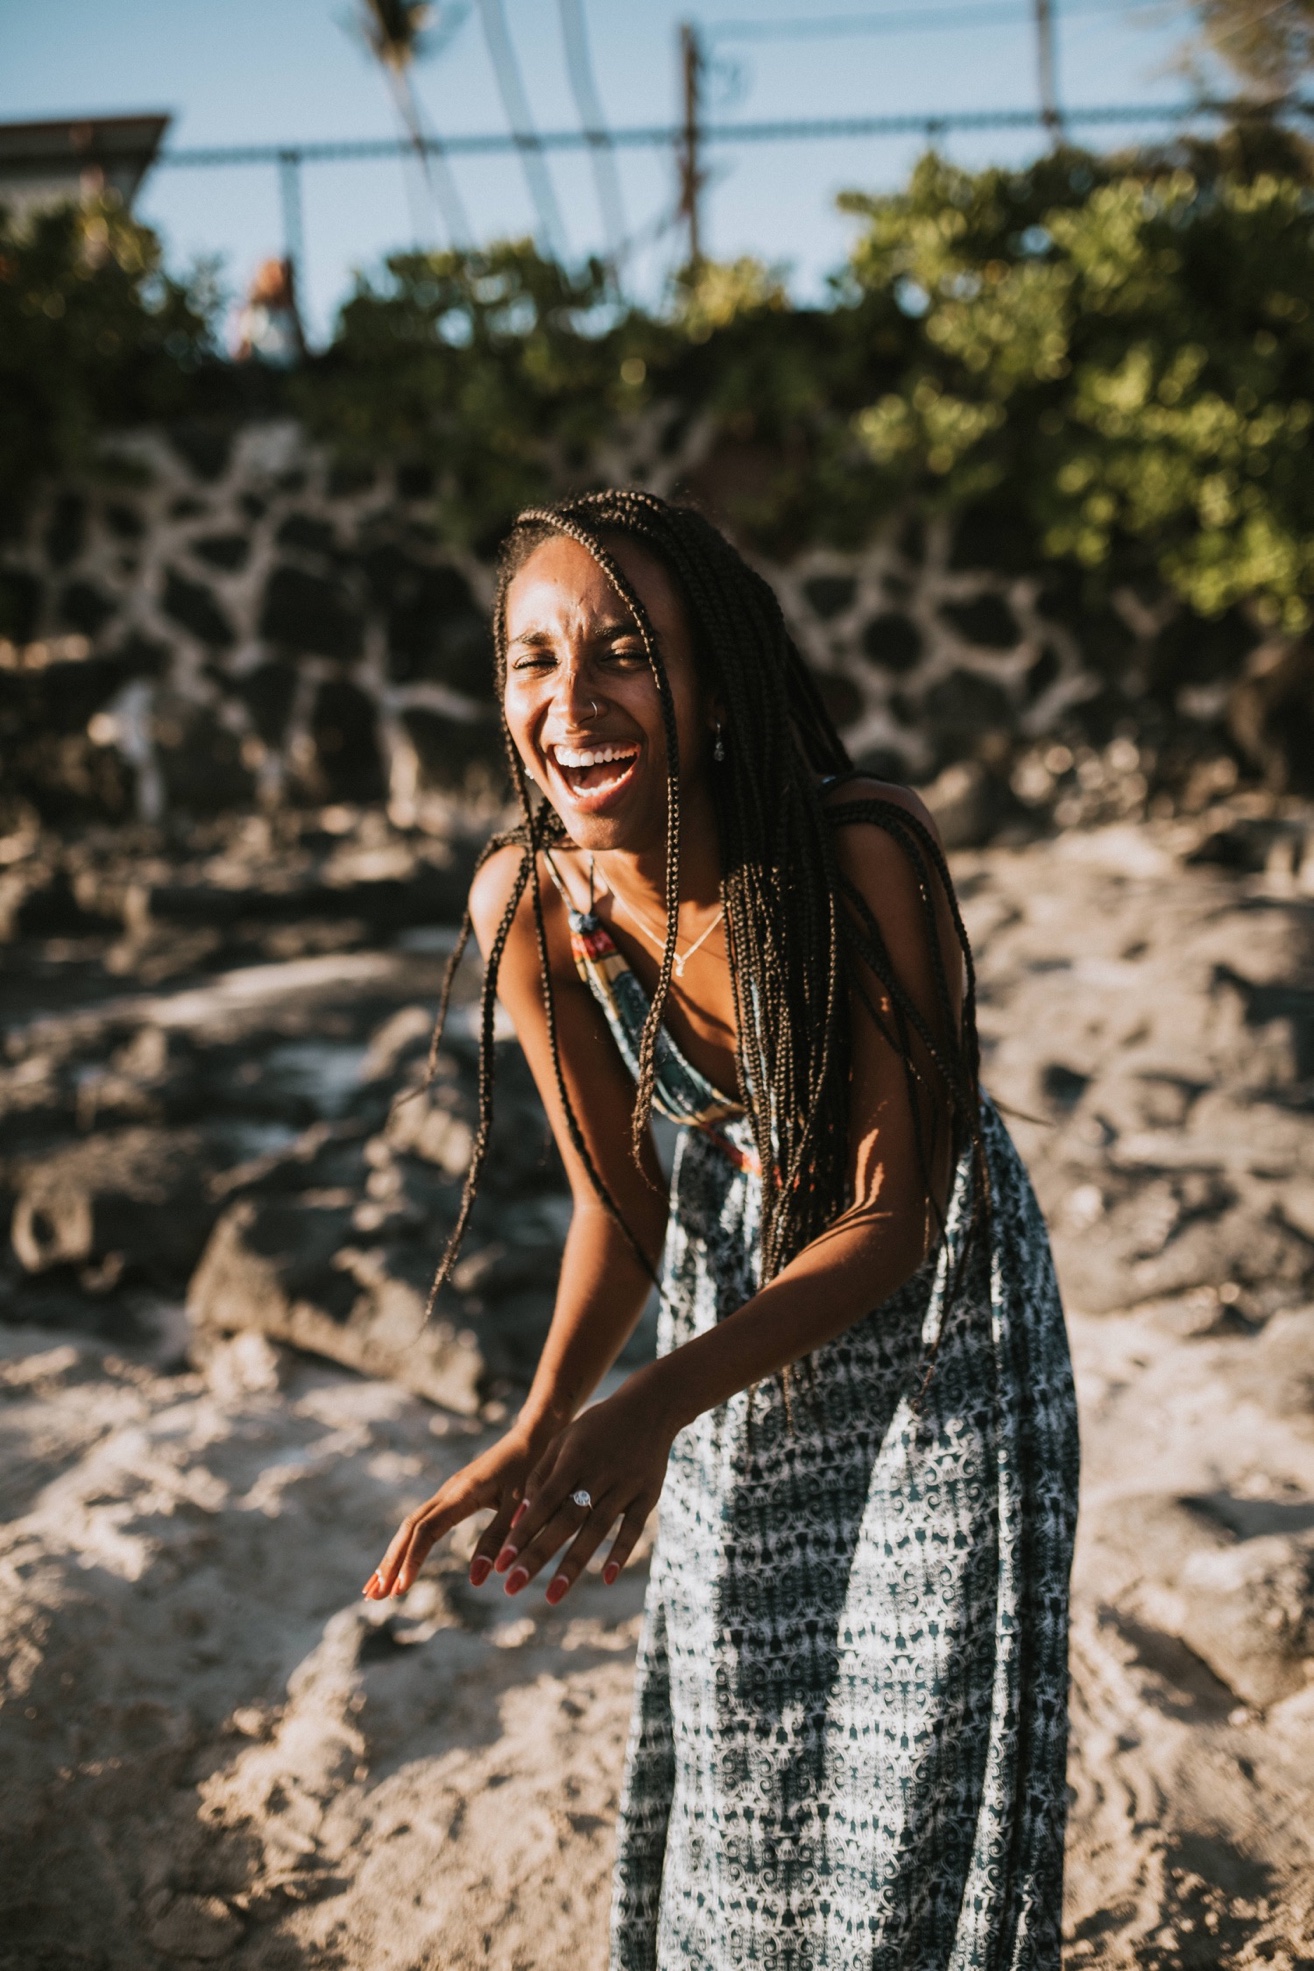 Girl laughing on beach in Hawaii